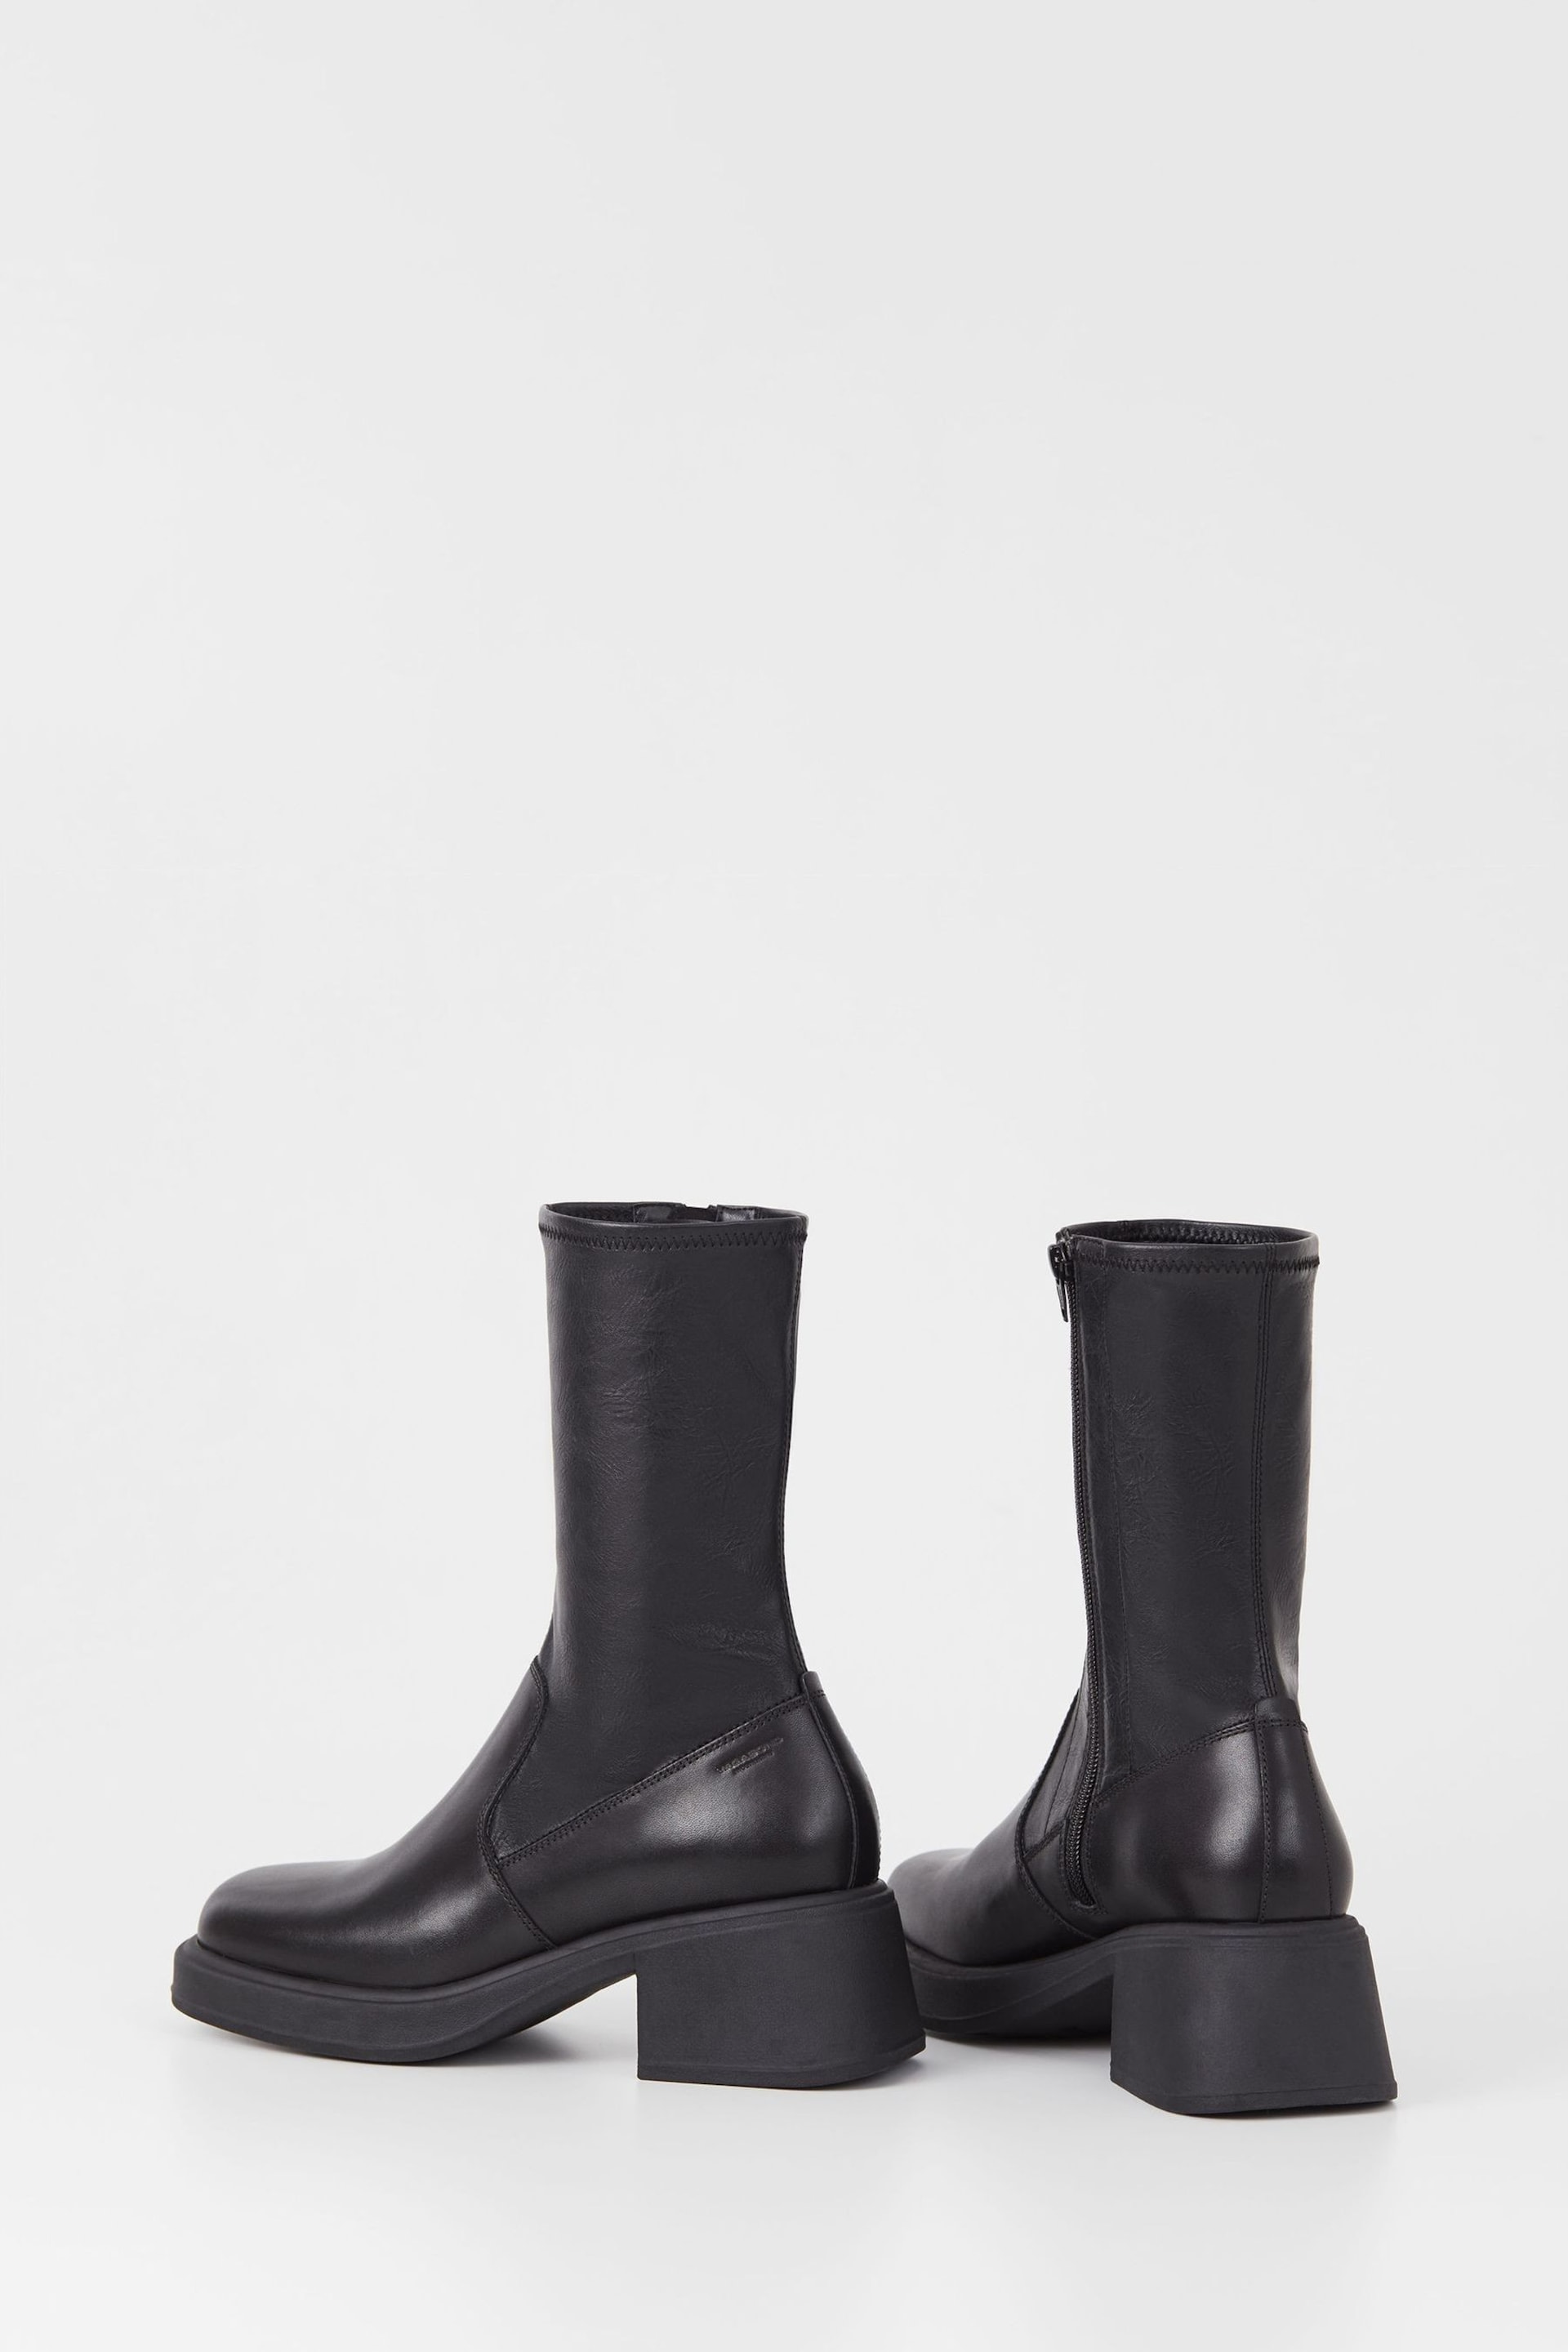 Vagabond Shoemakers Dorah Ankle Stretch Black Boots - Image 3 of 3